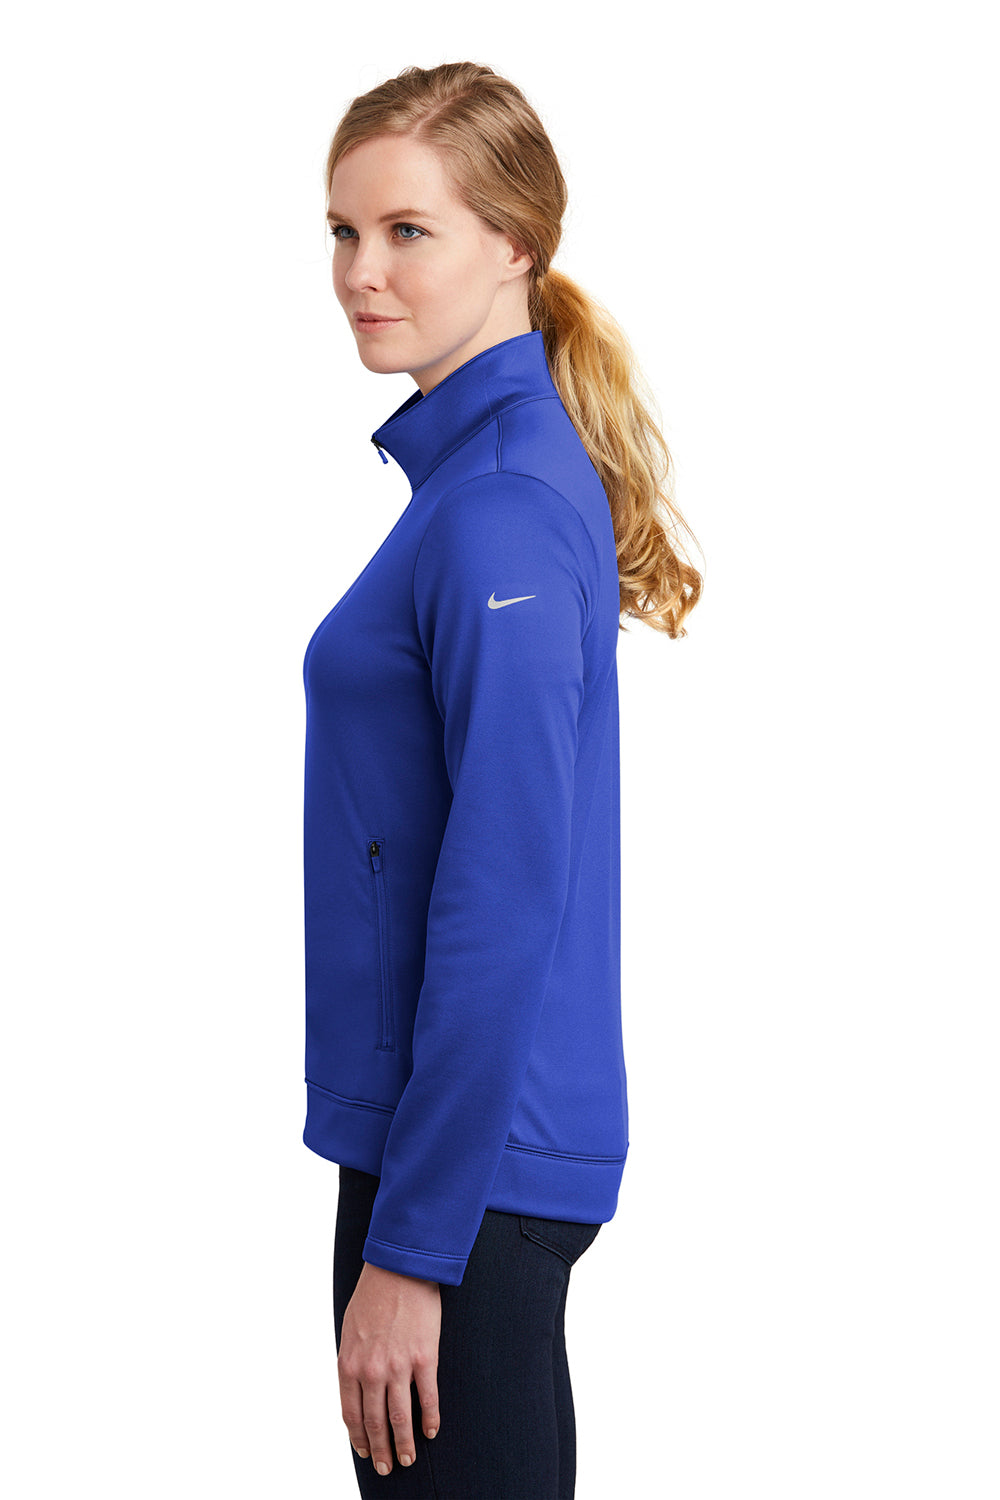 Nike NKAH6260 Womens Therma-Fit Moisture Wicking Fleece Full Zip Sweatshirt Game Royal Blue Model Side